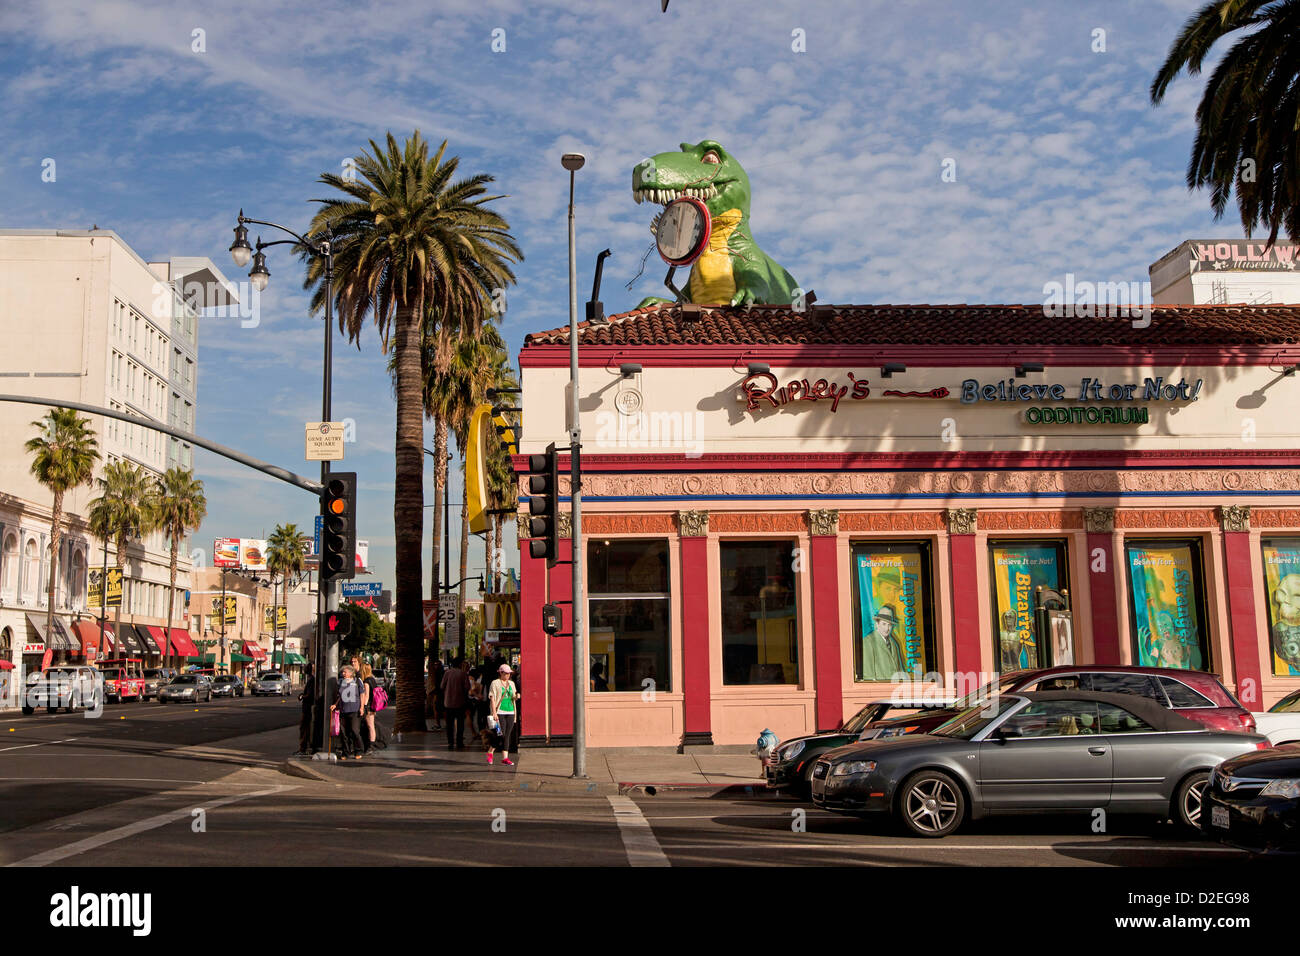 Ripleys glauben es oder nicht! Wenig am Hollywood Boulevard in Hollywood, Los Angeles, Kalifornien, Stockfoto